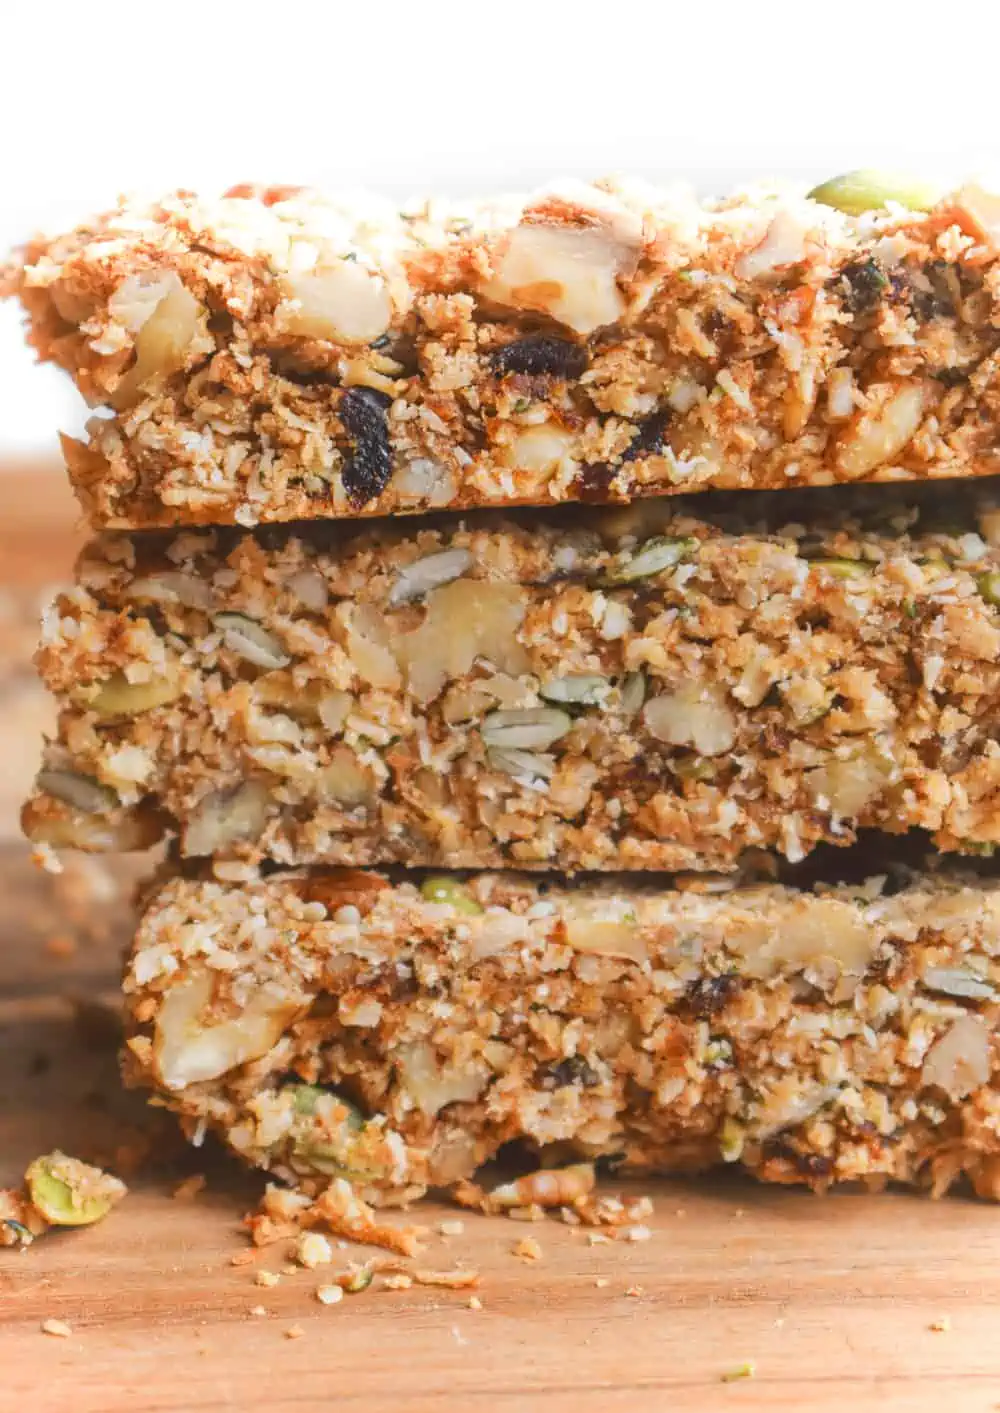 Homemade Granola Bars | Healthy Snack On The Go | World of Vegan | #granola #bars #snack #vegan #breakfast #fall #worldofvegan